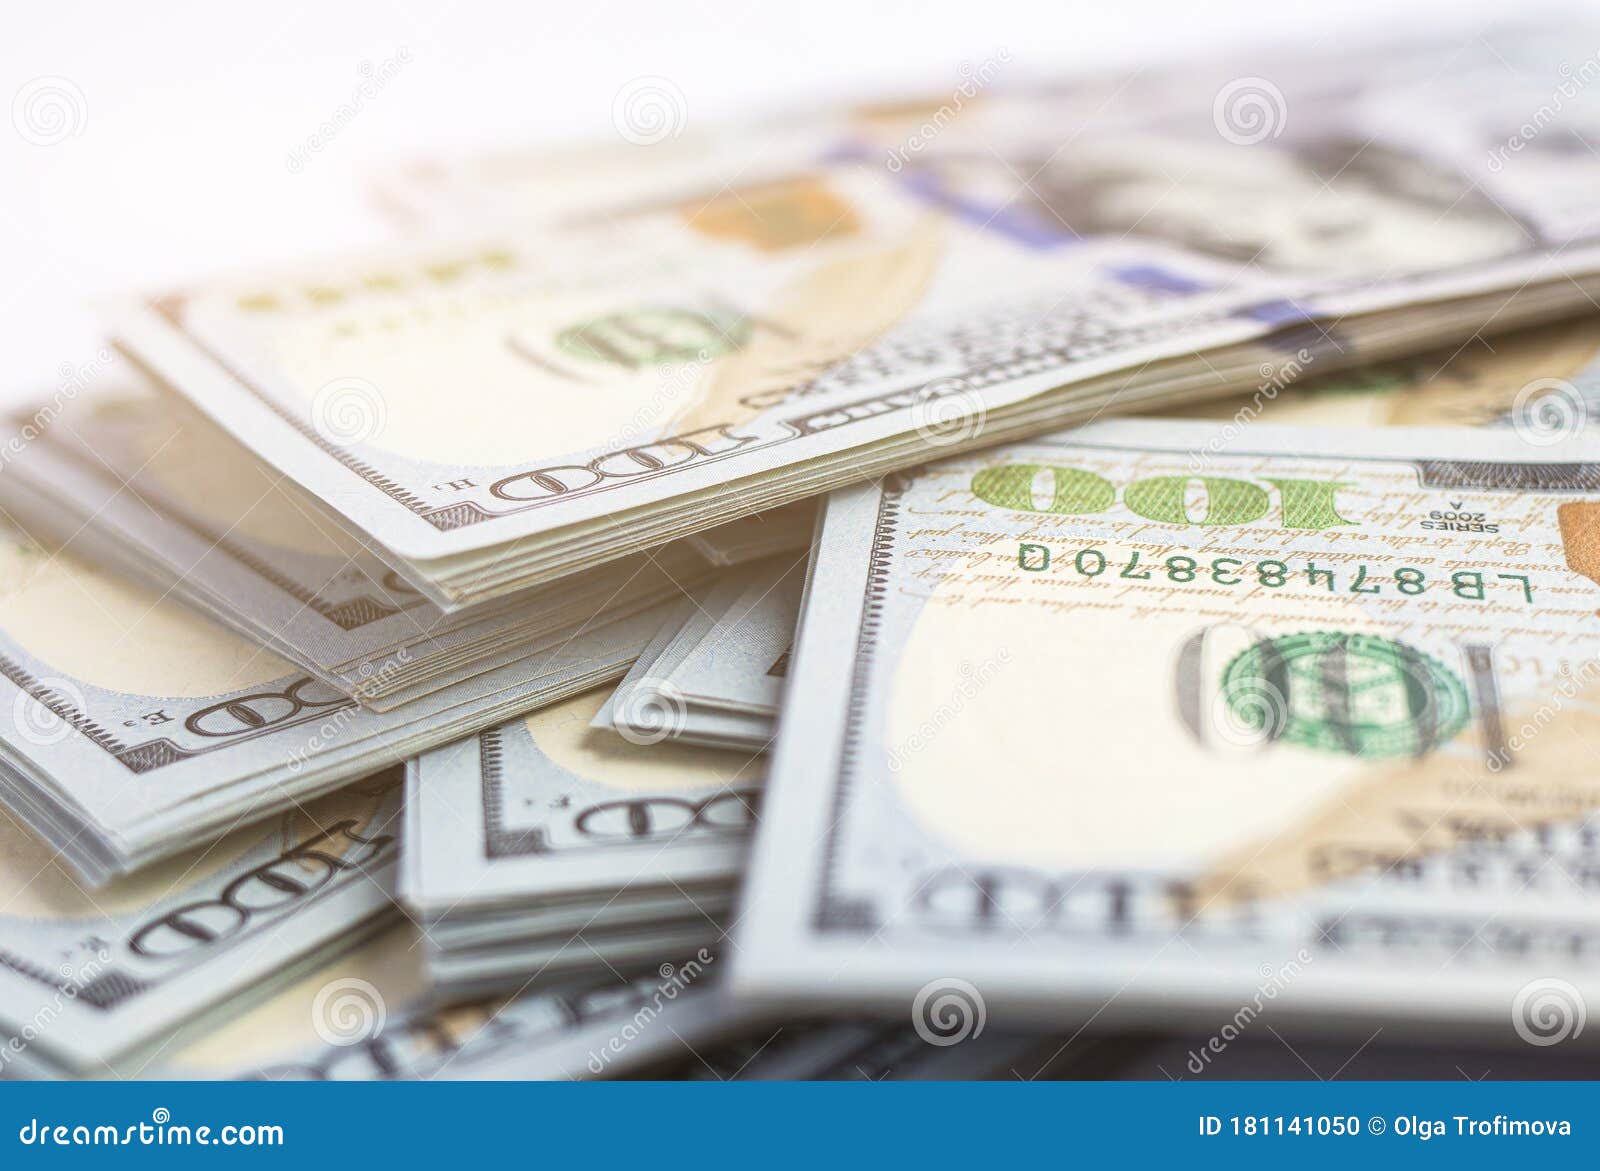 a bunch of dollar bills close up